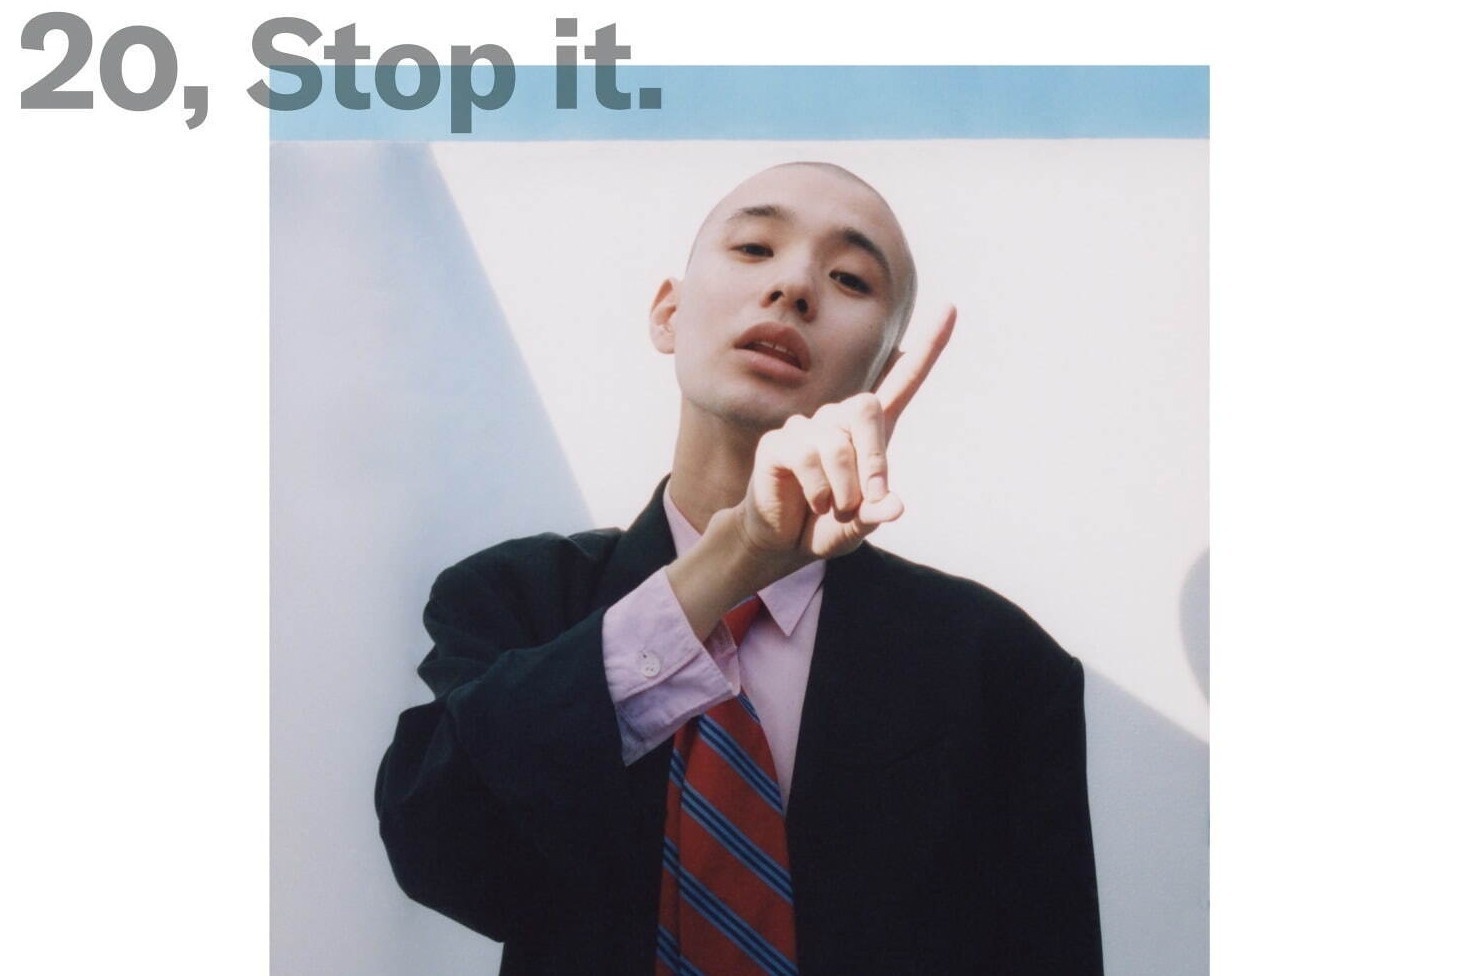 KID FRESINO最新アルバム『20,Stop it.』レコード化、BIMら客演迎えた 